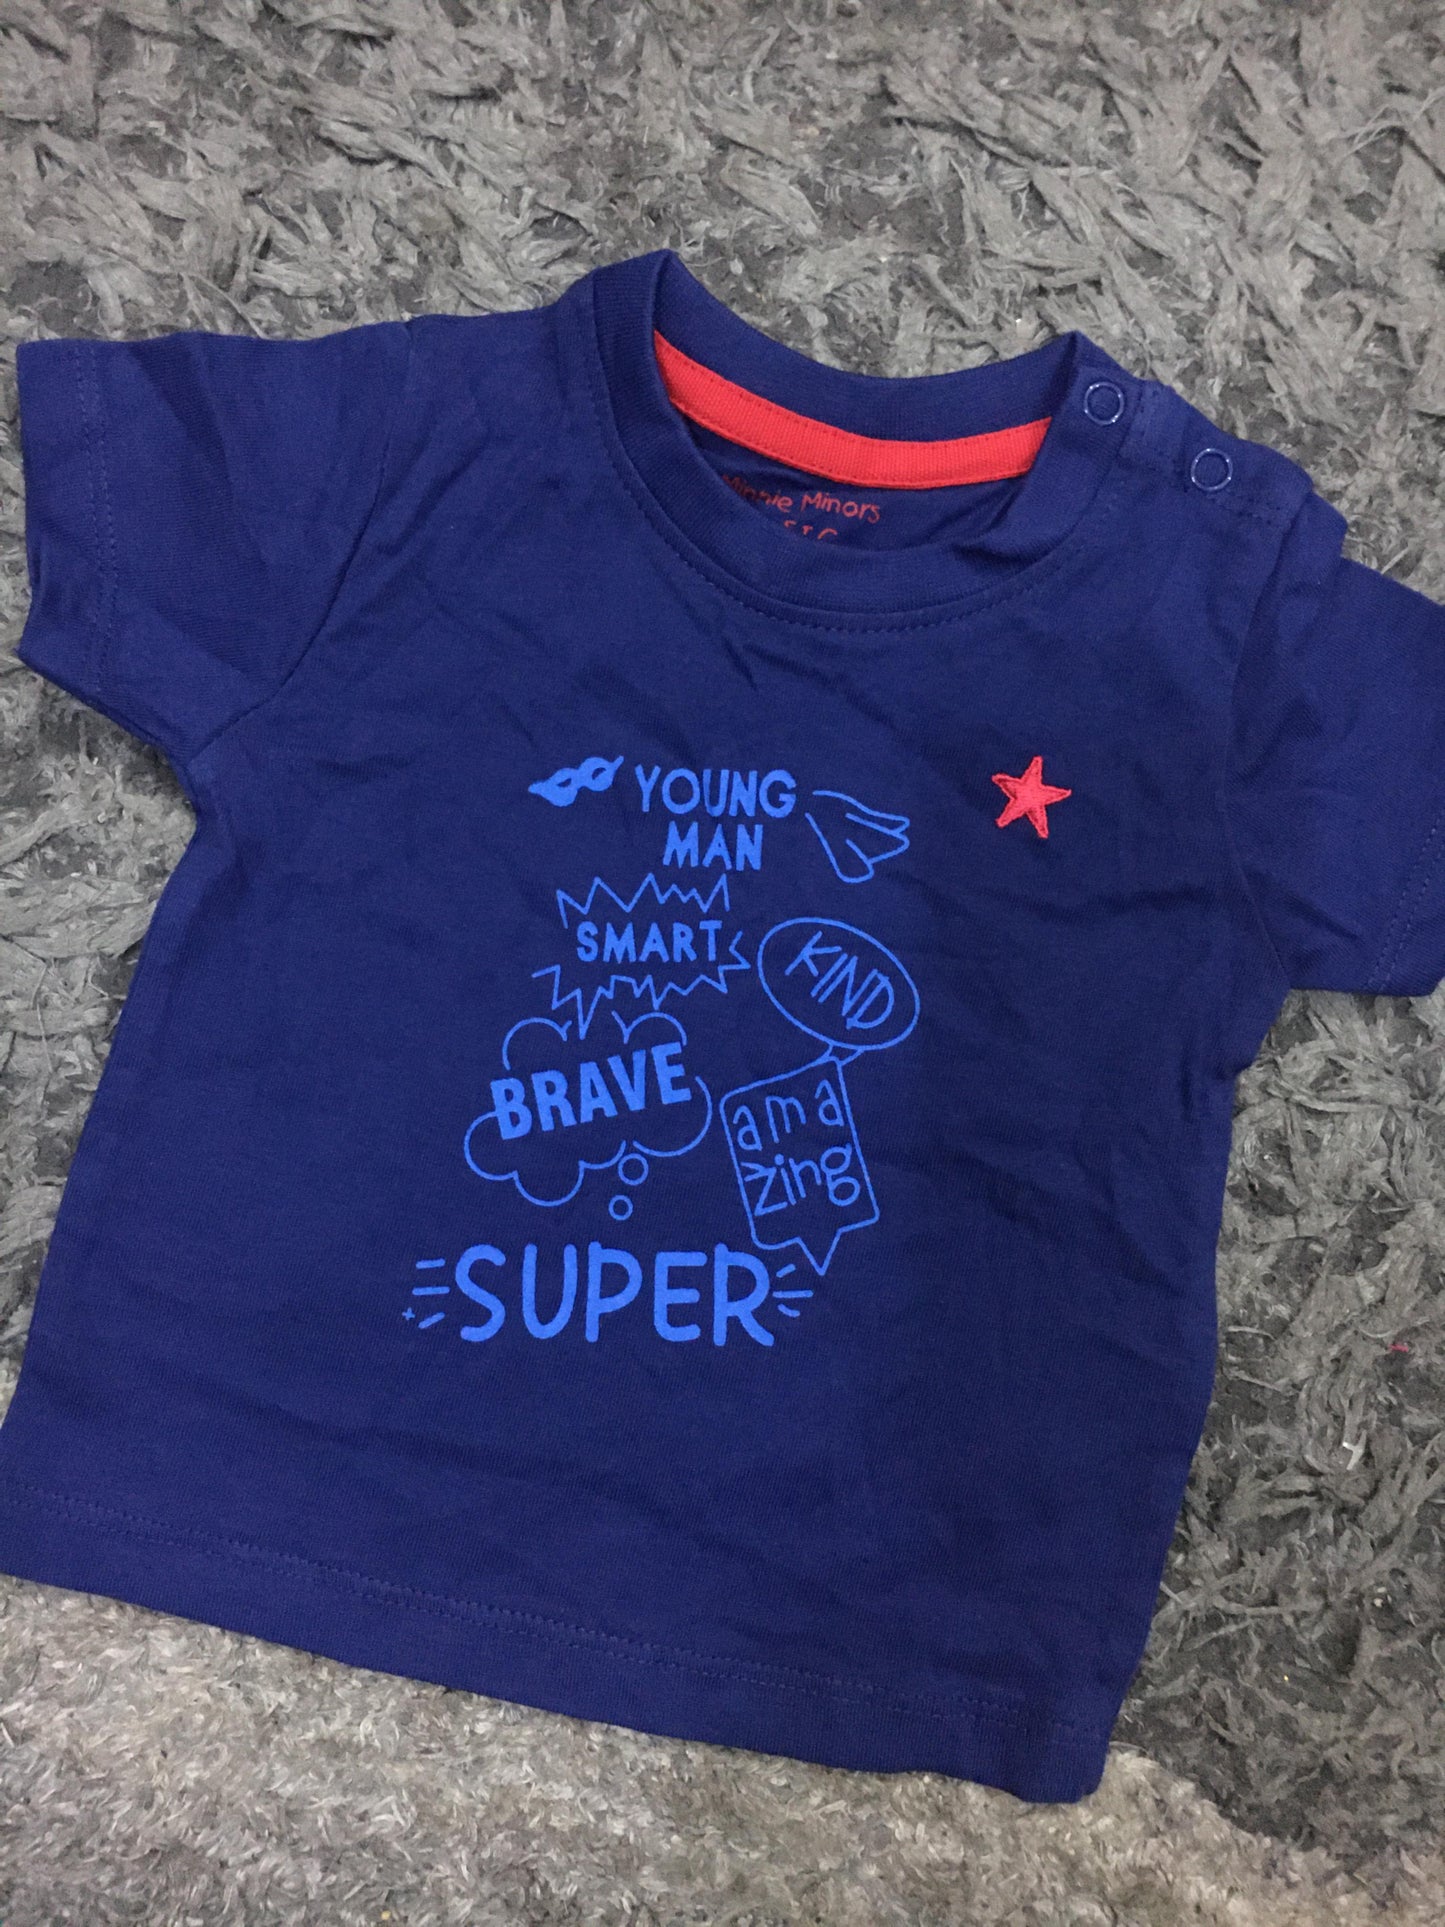 Kids Infant Original Minnie Minors Summer Blue Shirt Super Brave